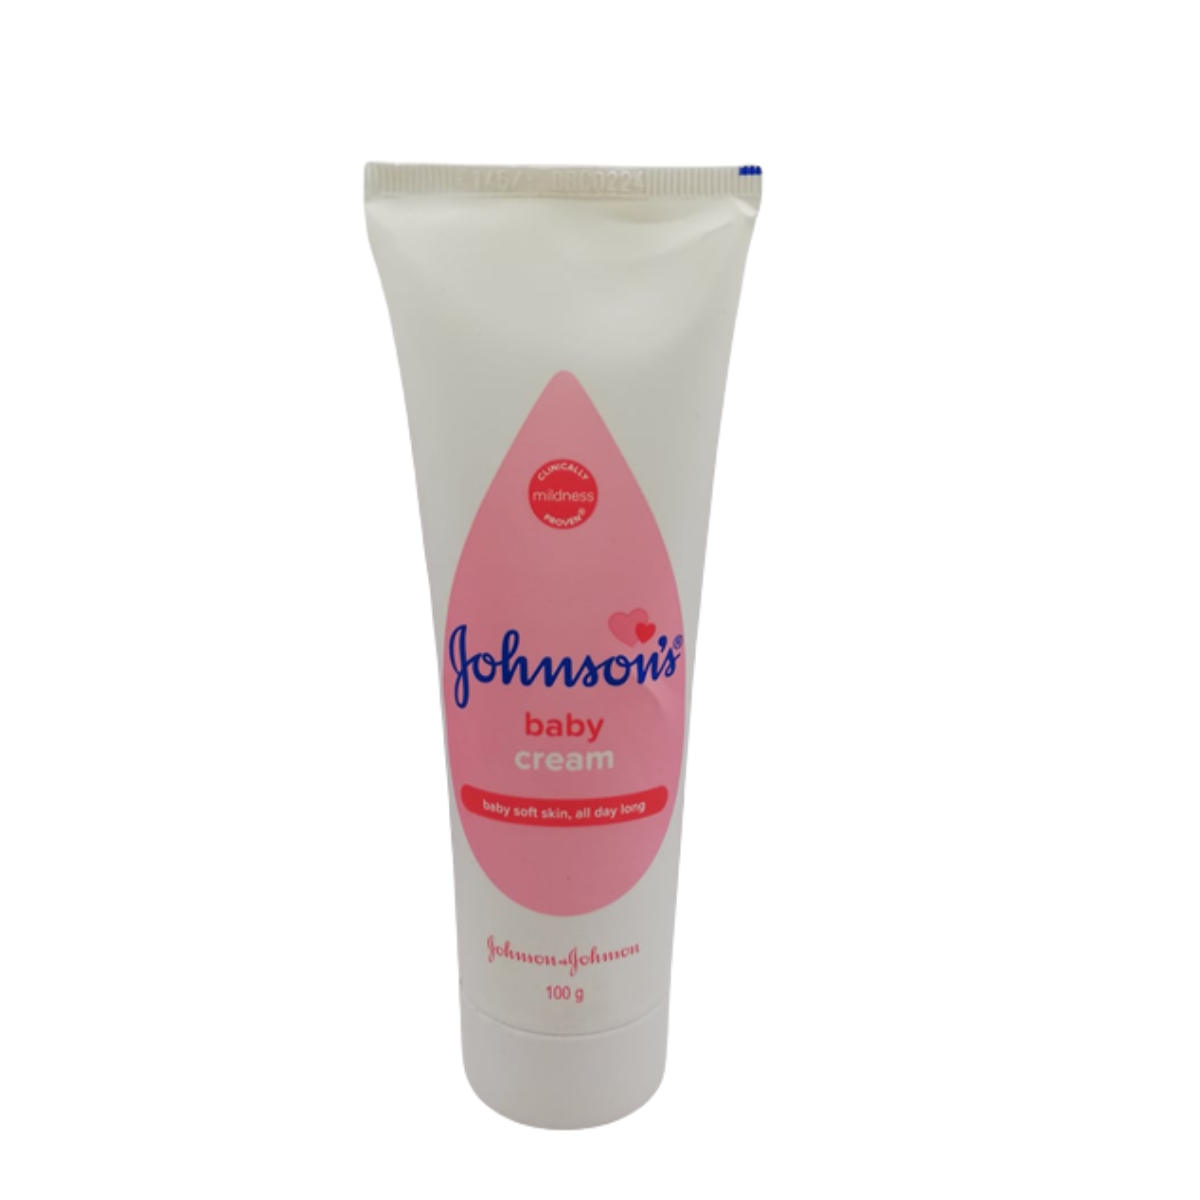 Johnson's Baby Cream - Baby Soft Skin - All Day Long - 100g